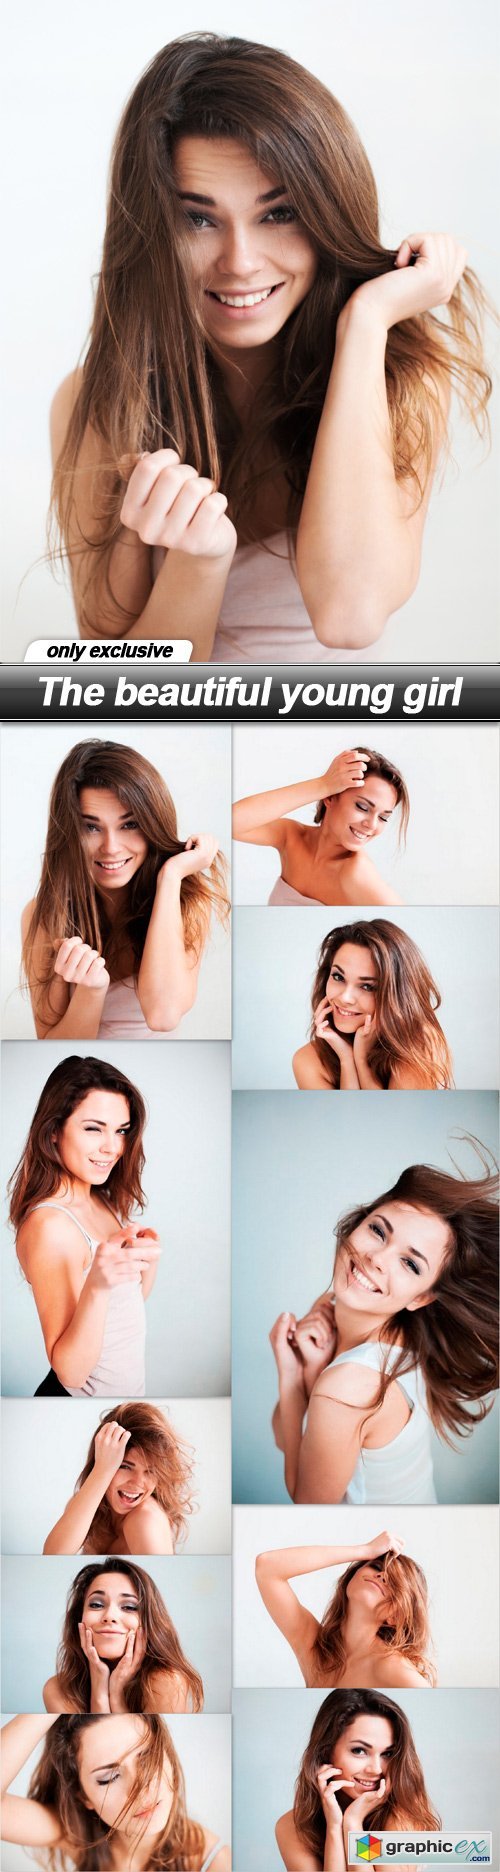 The beautiful young girl - 10 UHQ JPEG